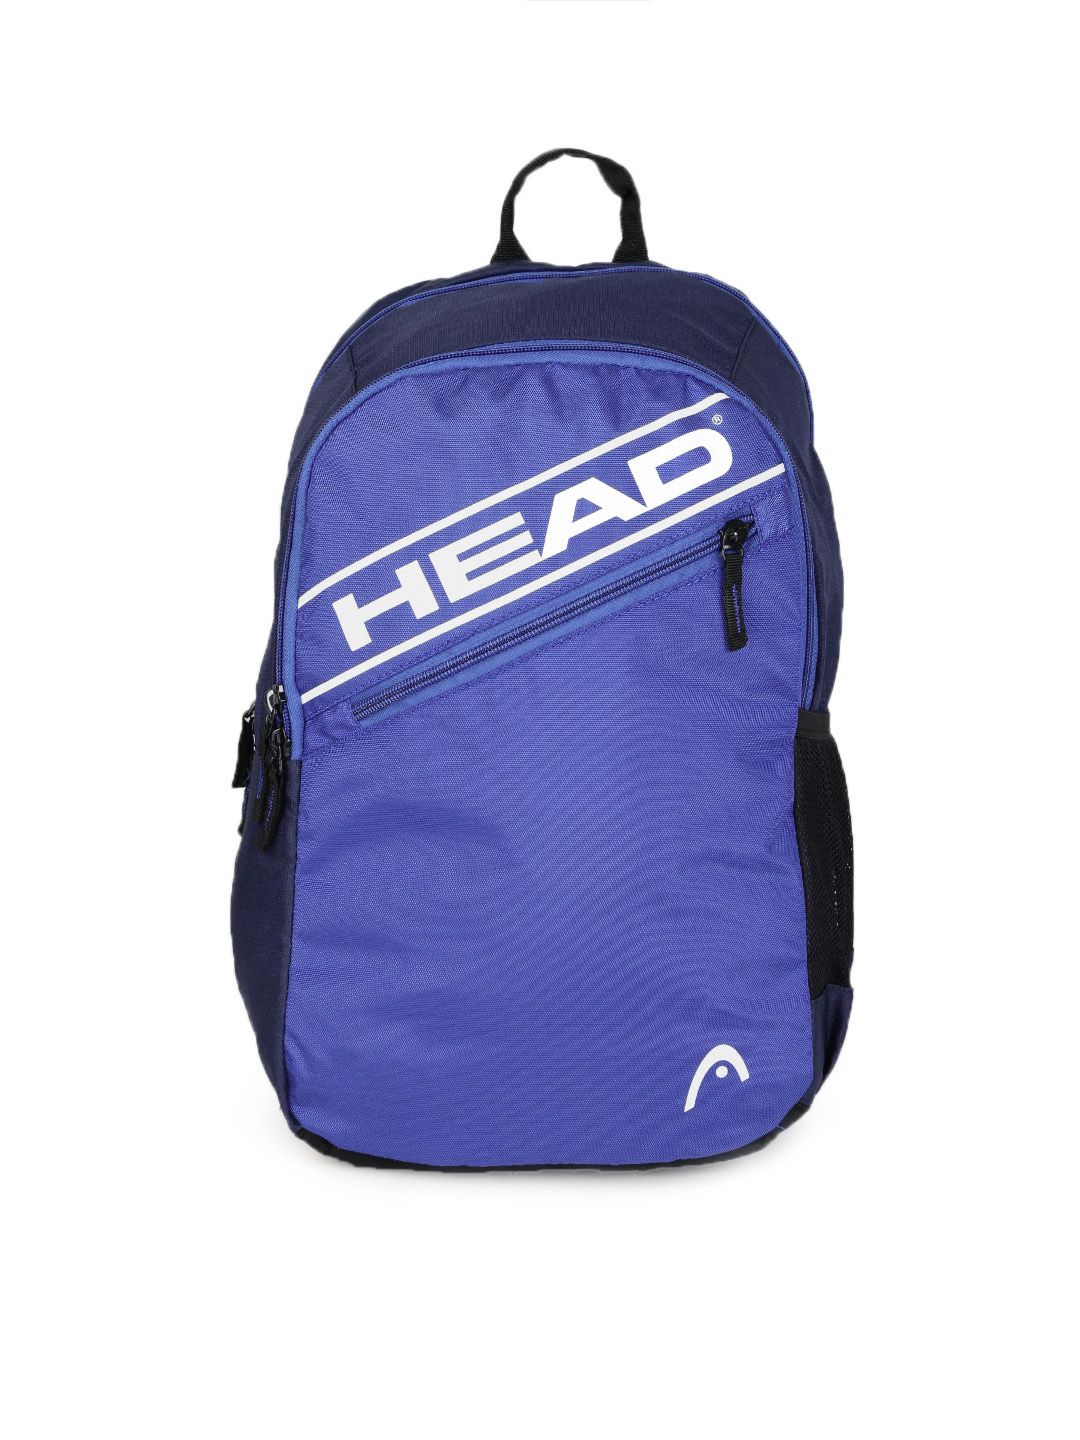 Head Unisex Blue Brand Print Davis Laptop Backpack Price in India